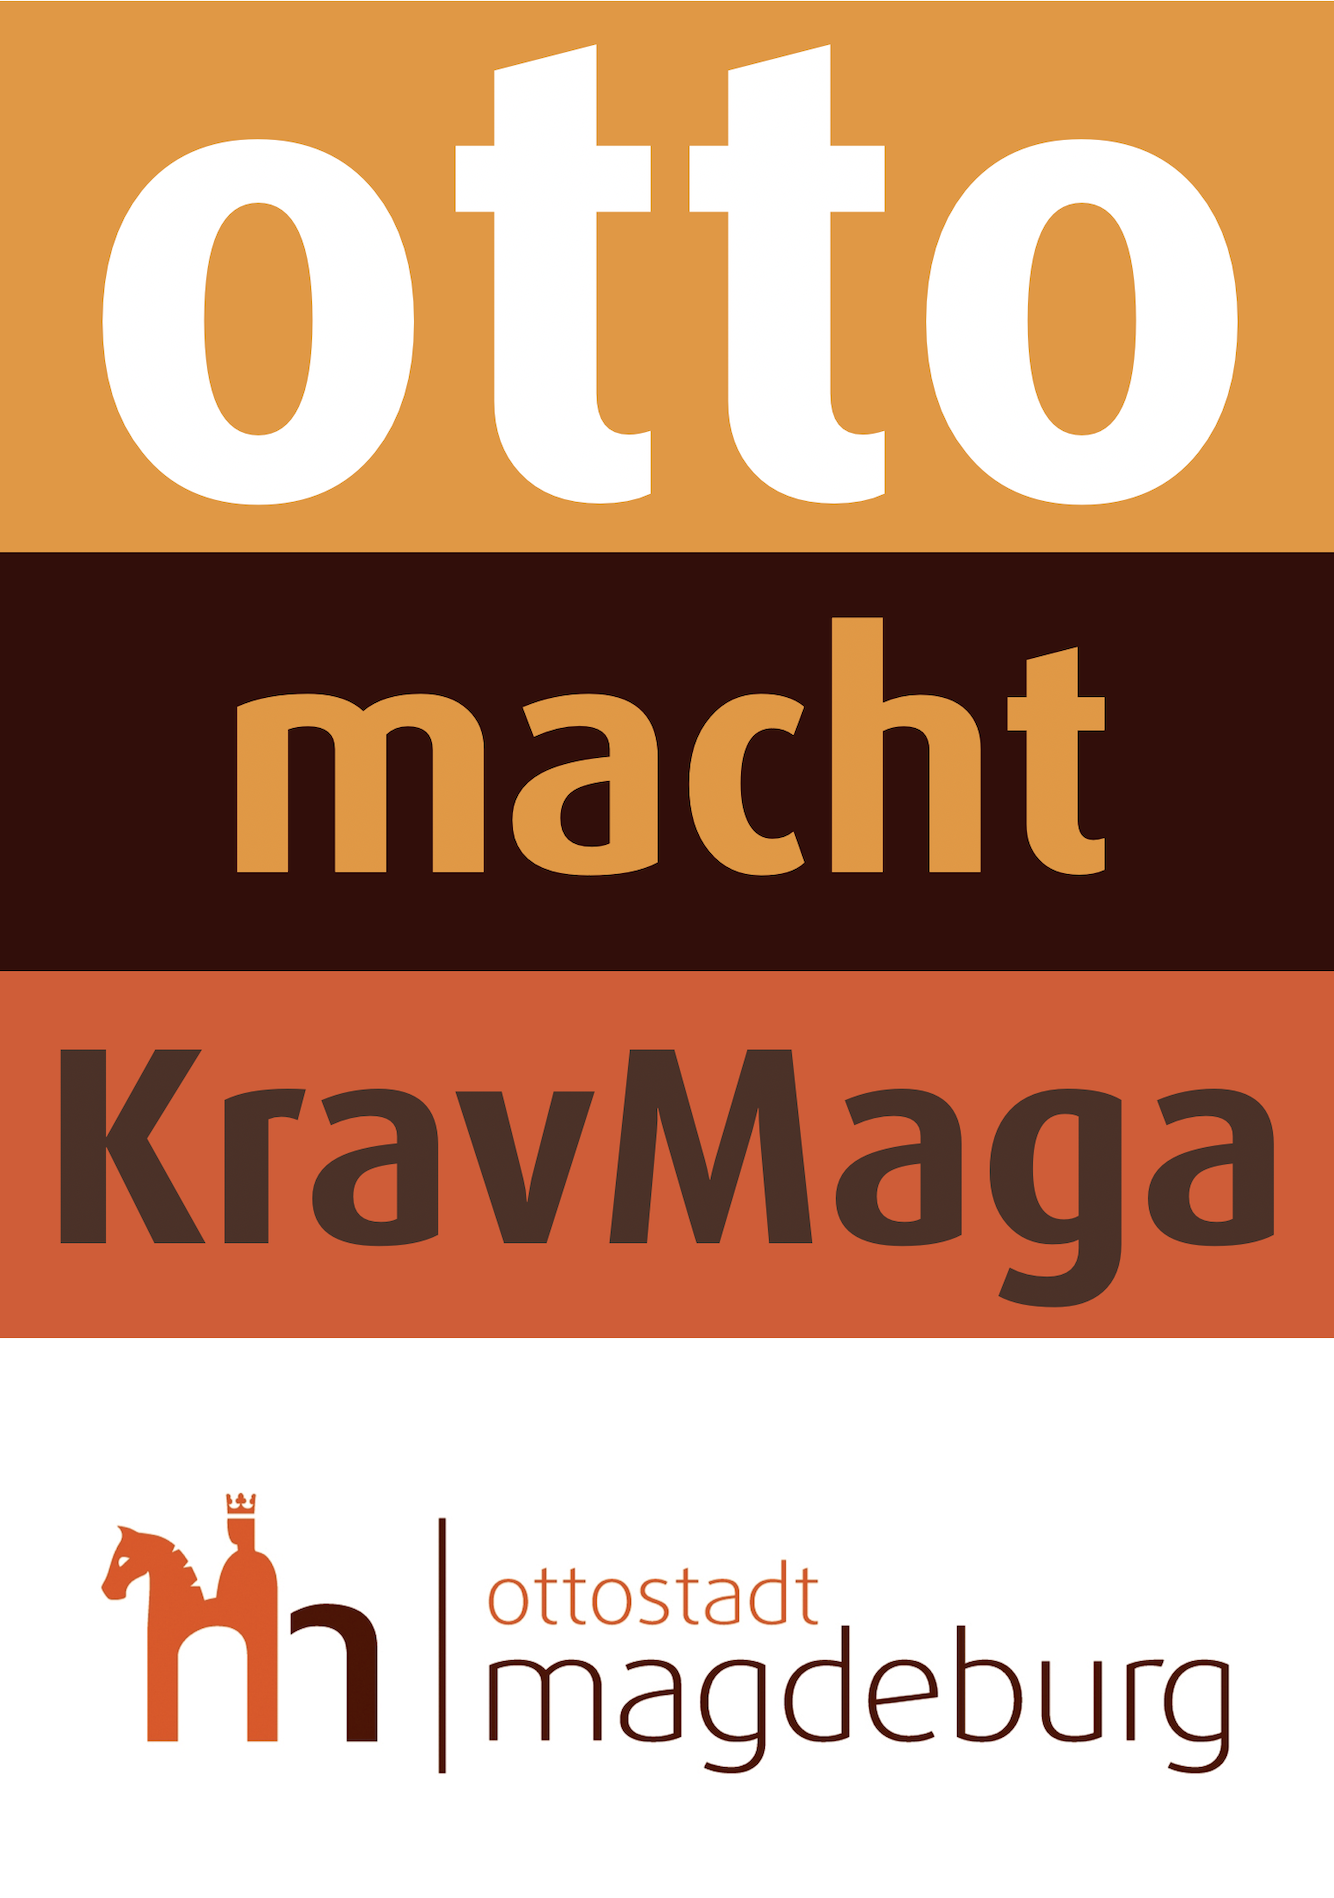 //kravmaga-magdeburg.de/wp-content/uploads/2021/04/Otto-macht-KravMaga-Kopie.png